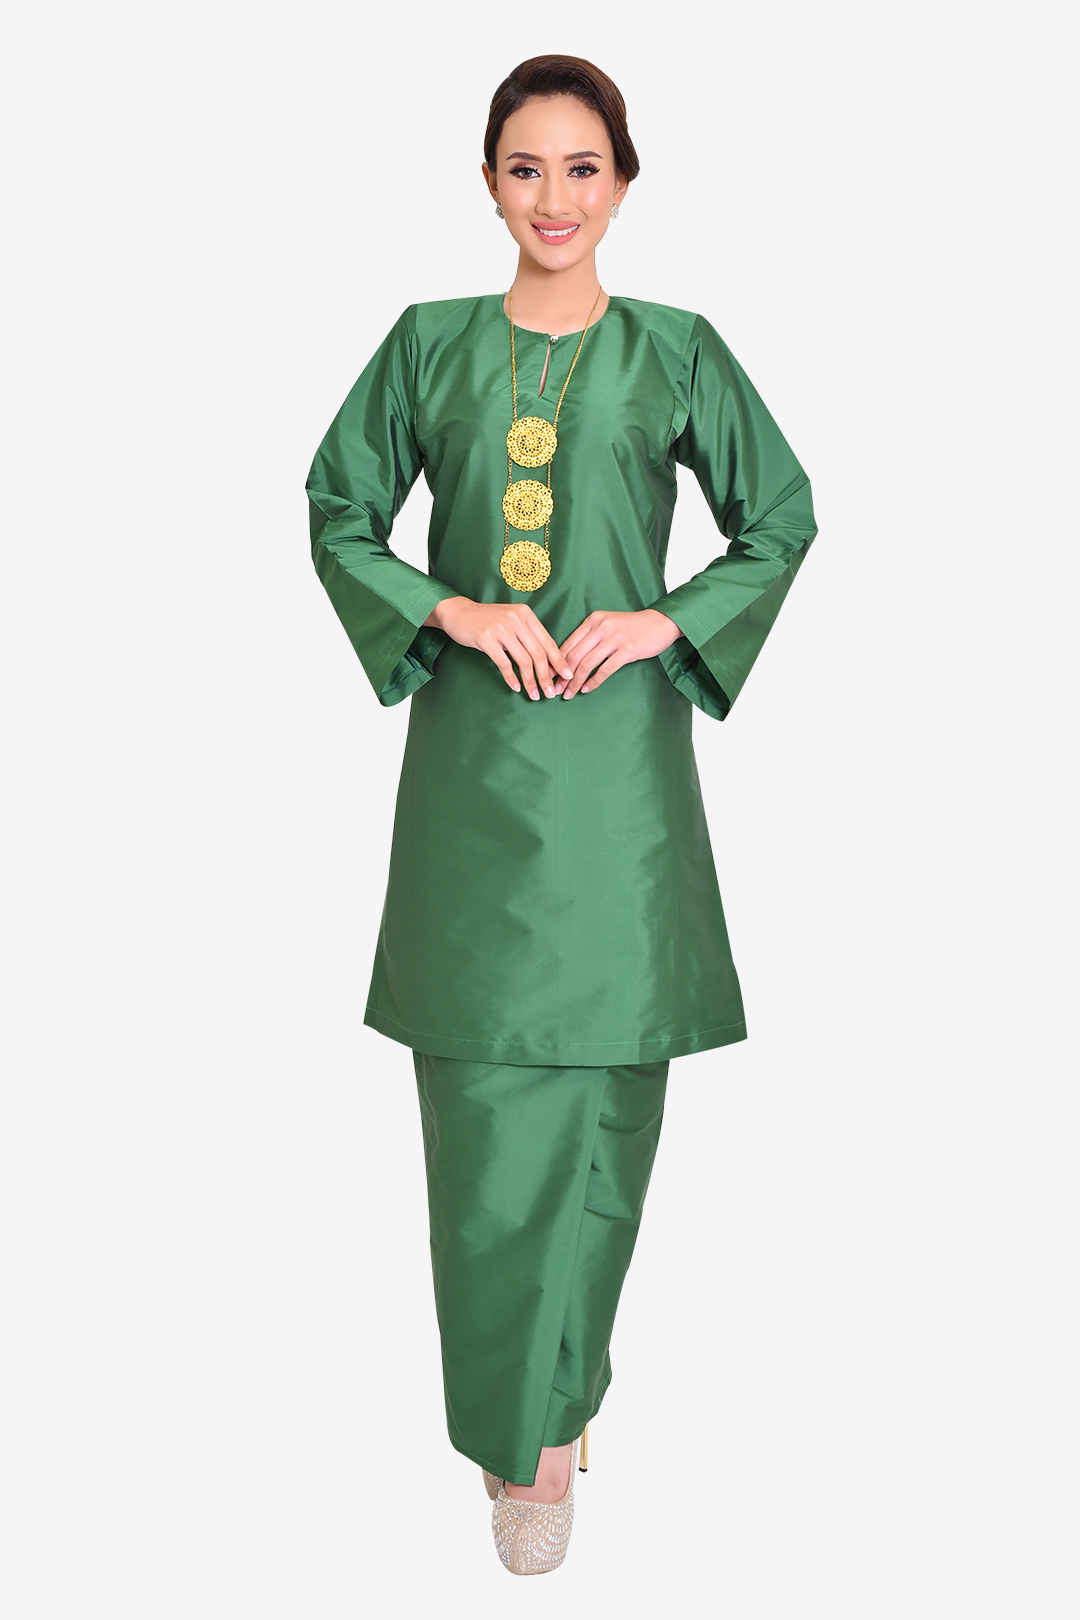 Gulati S Euro Moda Aalia Online Store Fabrics Of Excellence King Of Silk In Malaysia Women S Wear Baju Kurung Kemboja Kurung Pahang Kemboja Kurung Pahang